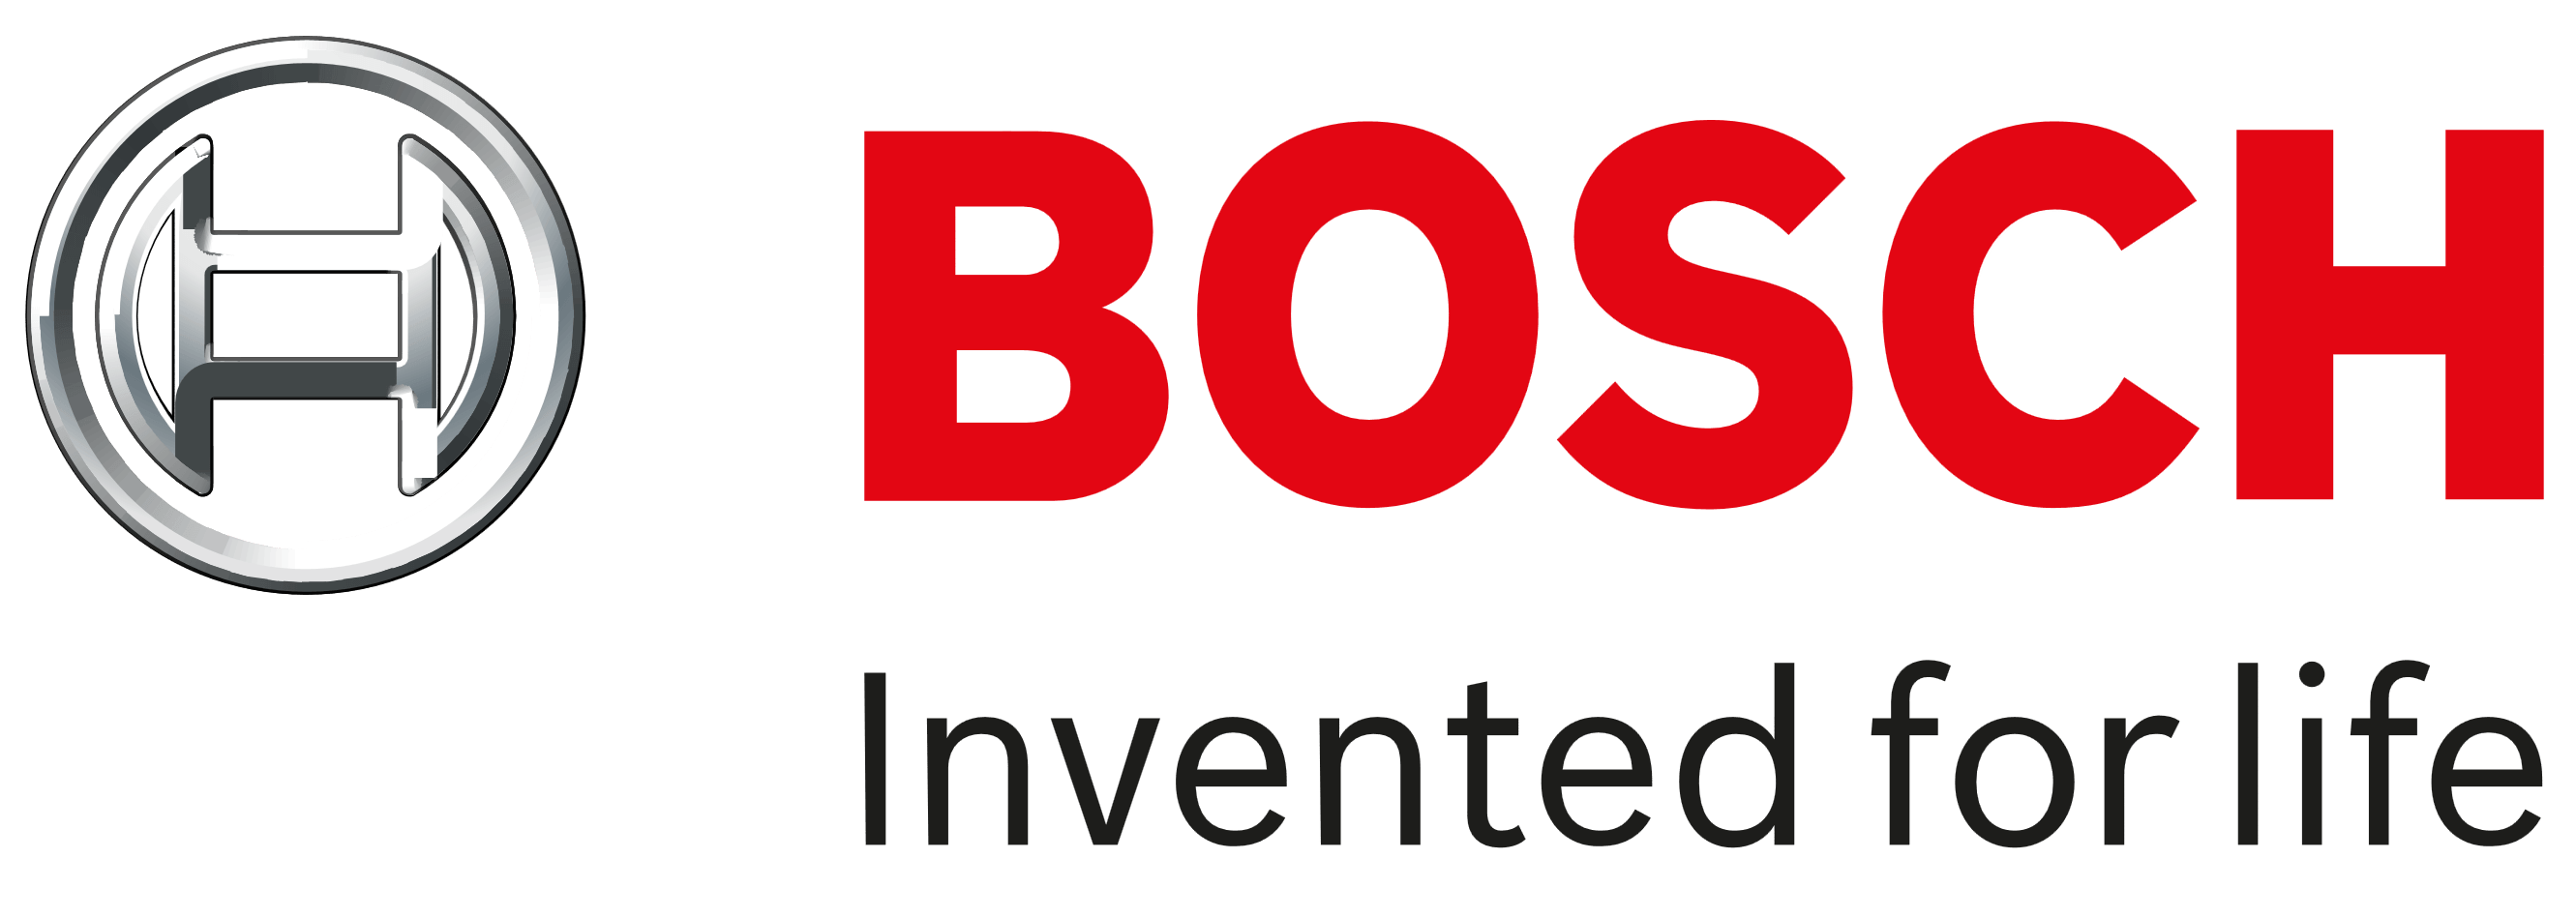 Bosch_logo_slogan.png